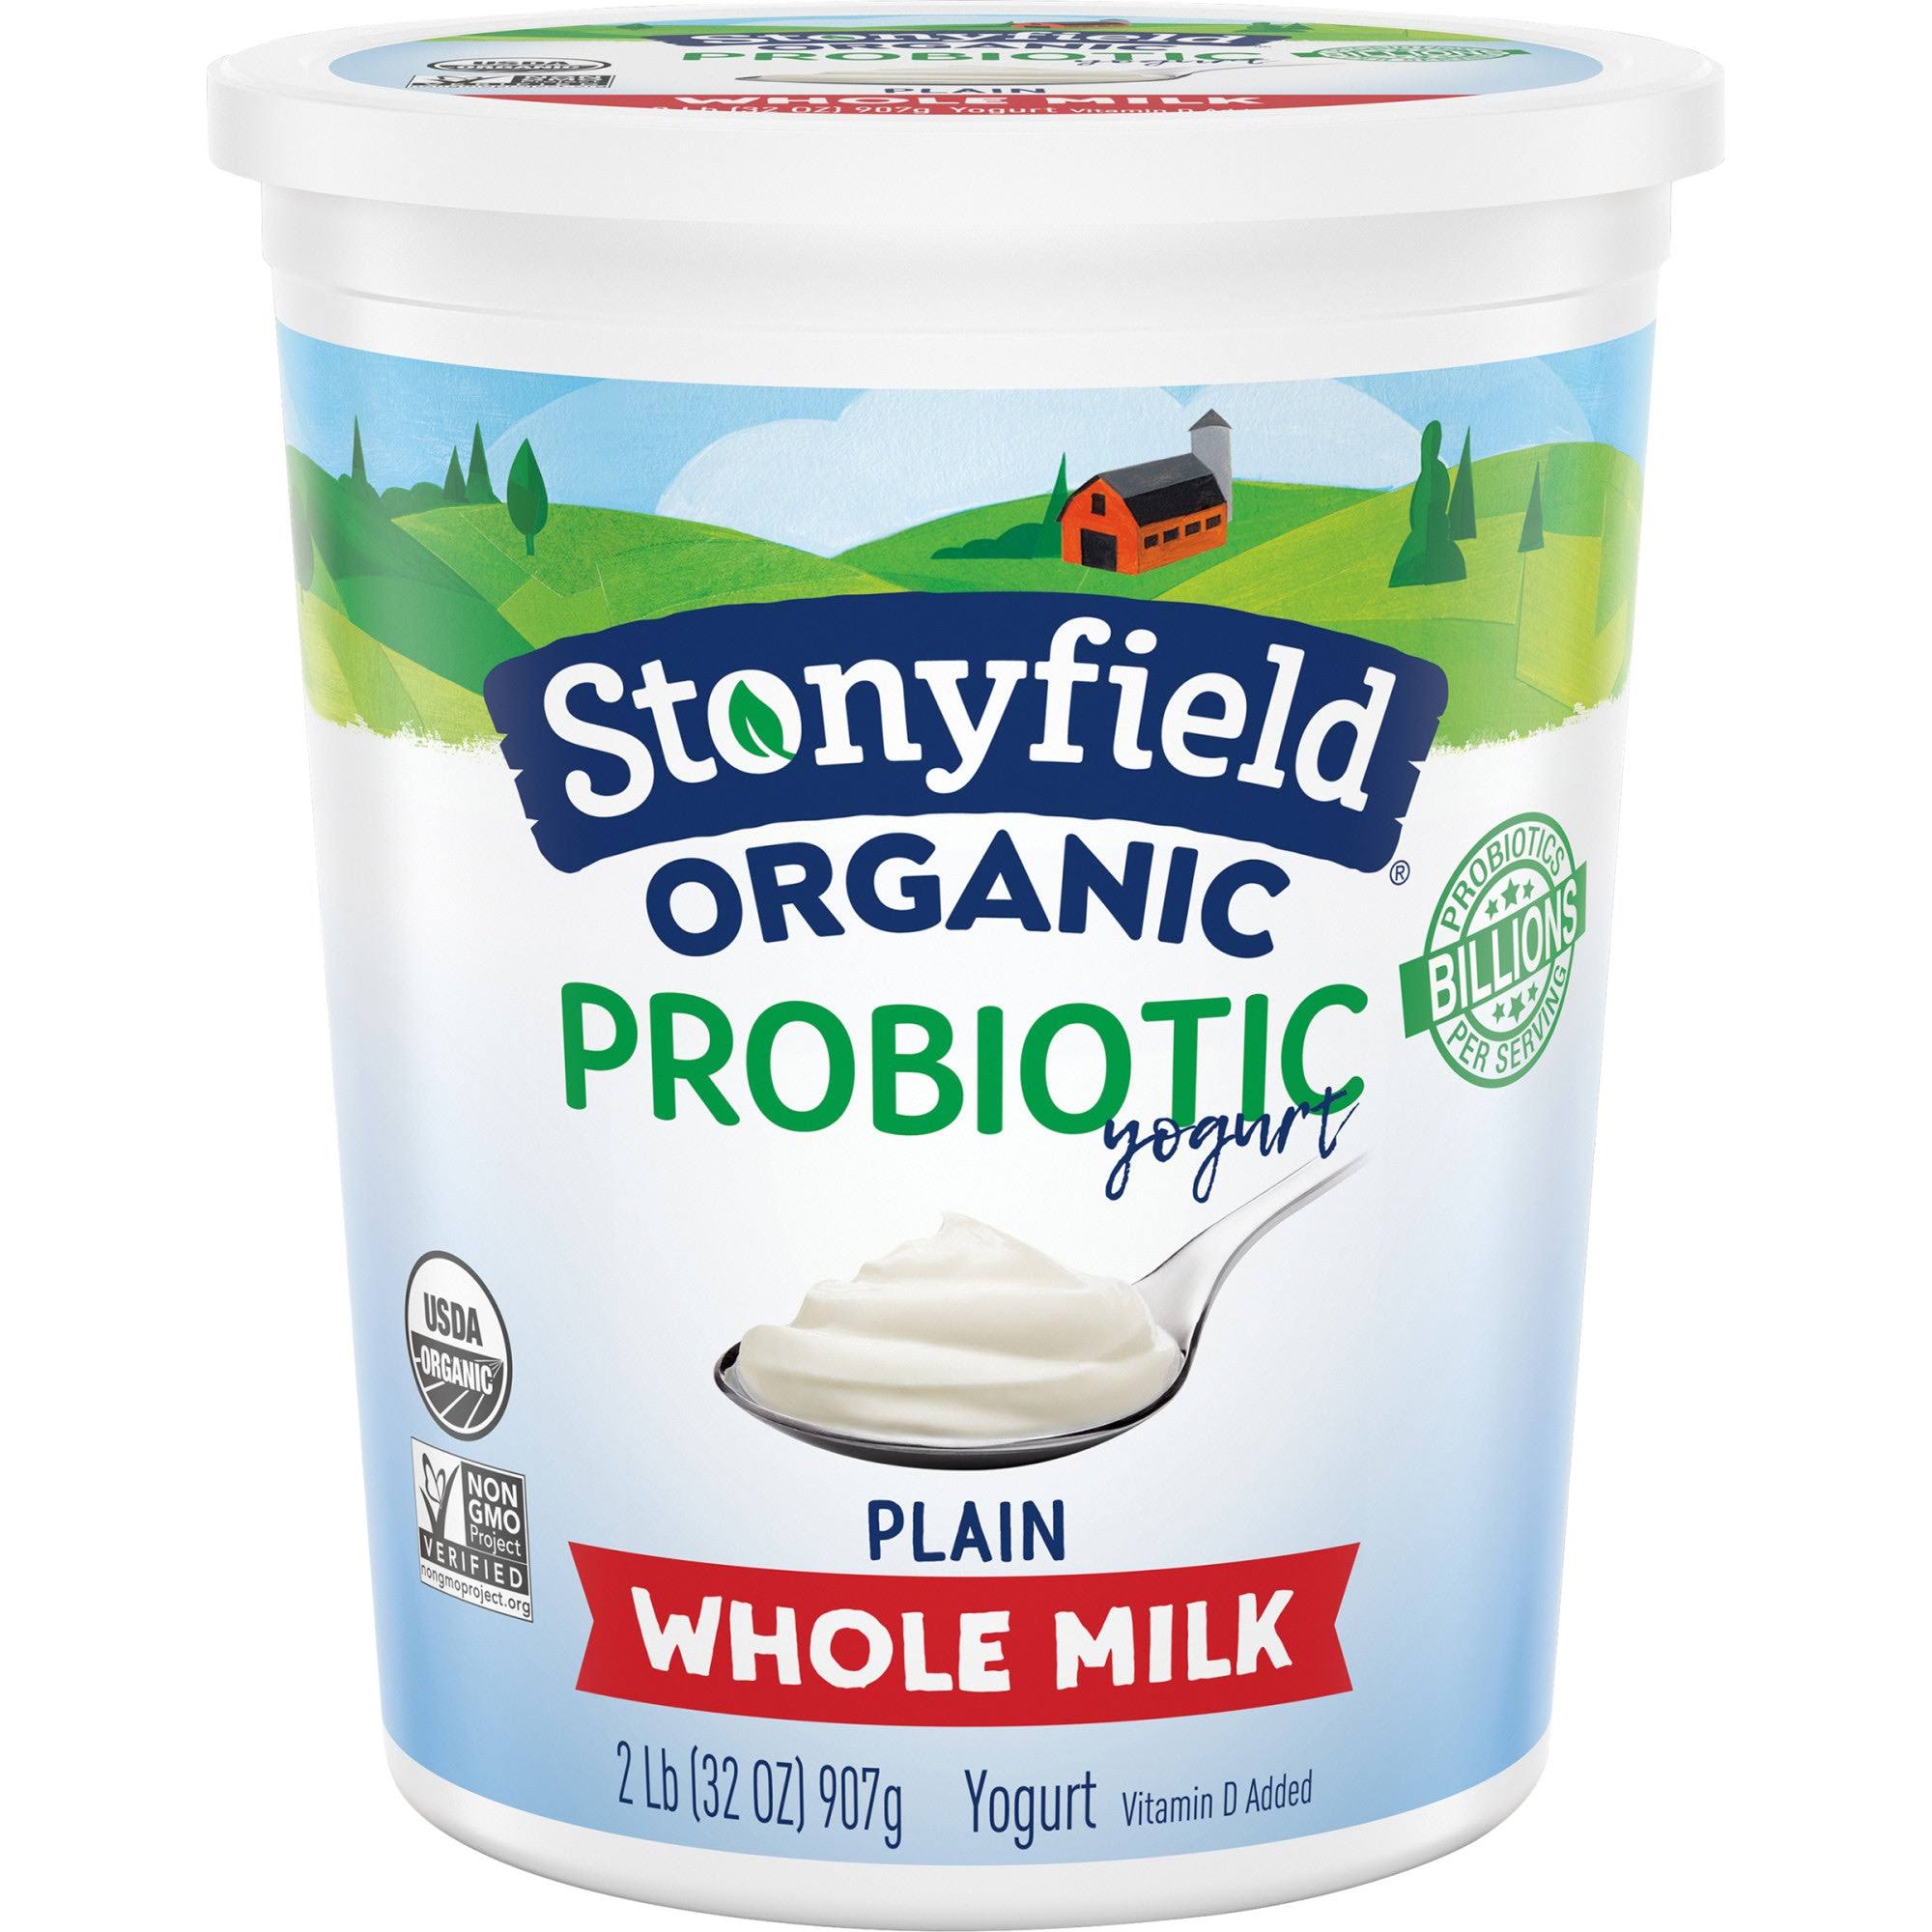 Stonyfield Organic Smooth and Creamy Whole Milk Plain Yogurt - 2lb